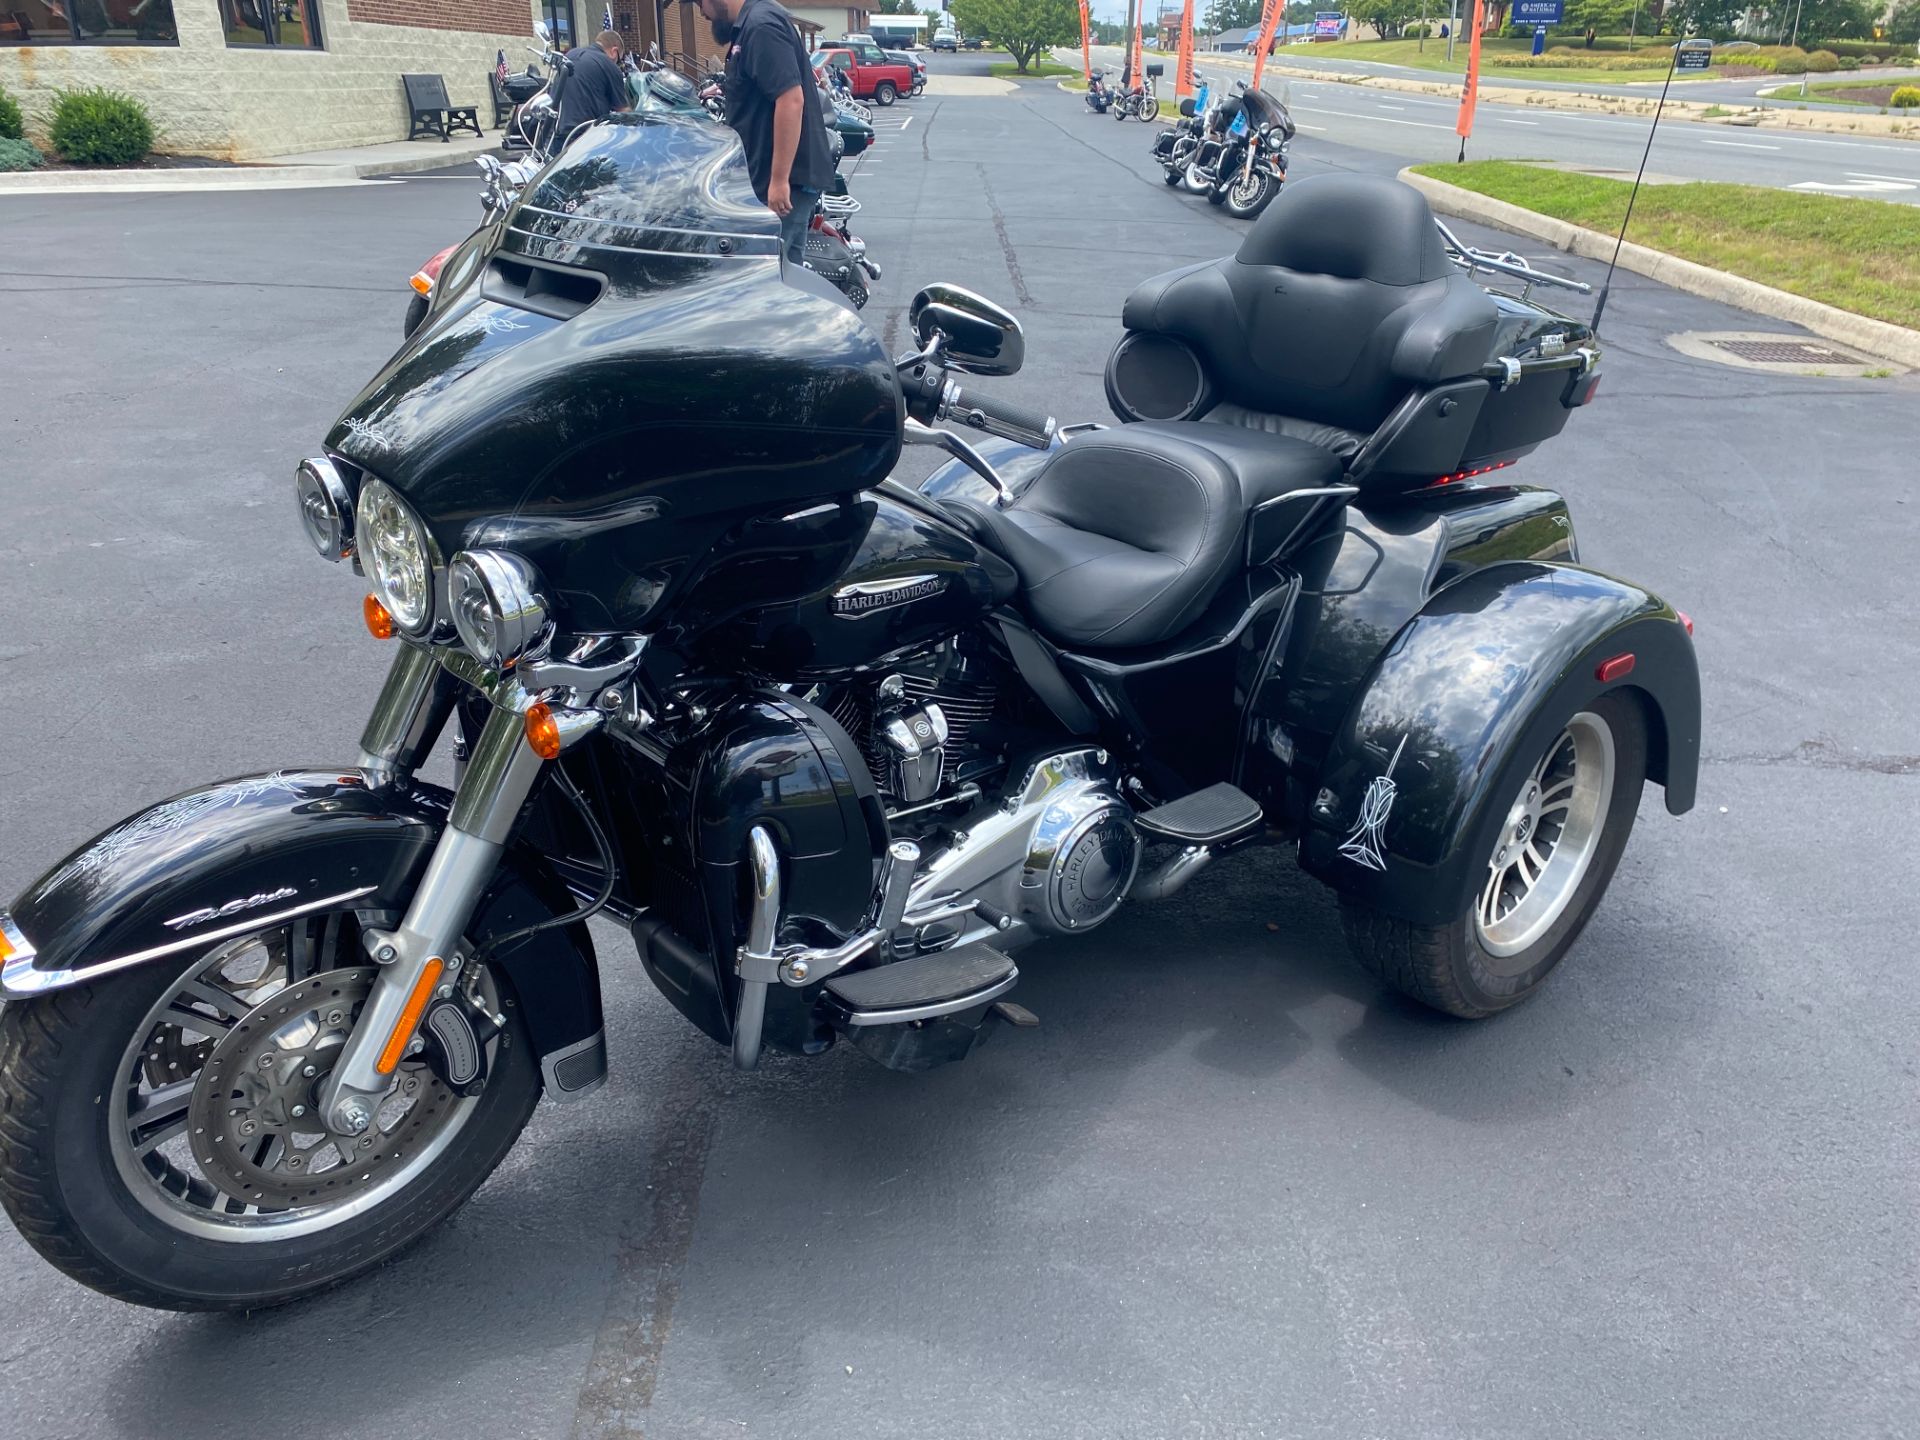 2018 Harley-Davidson Tri Glide® Ultra in Lynchburg, Virginia - Photo 6